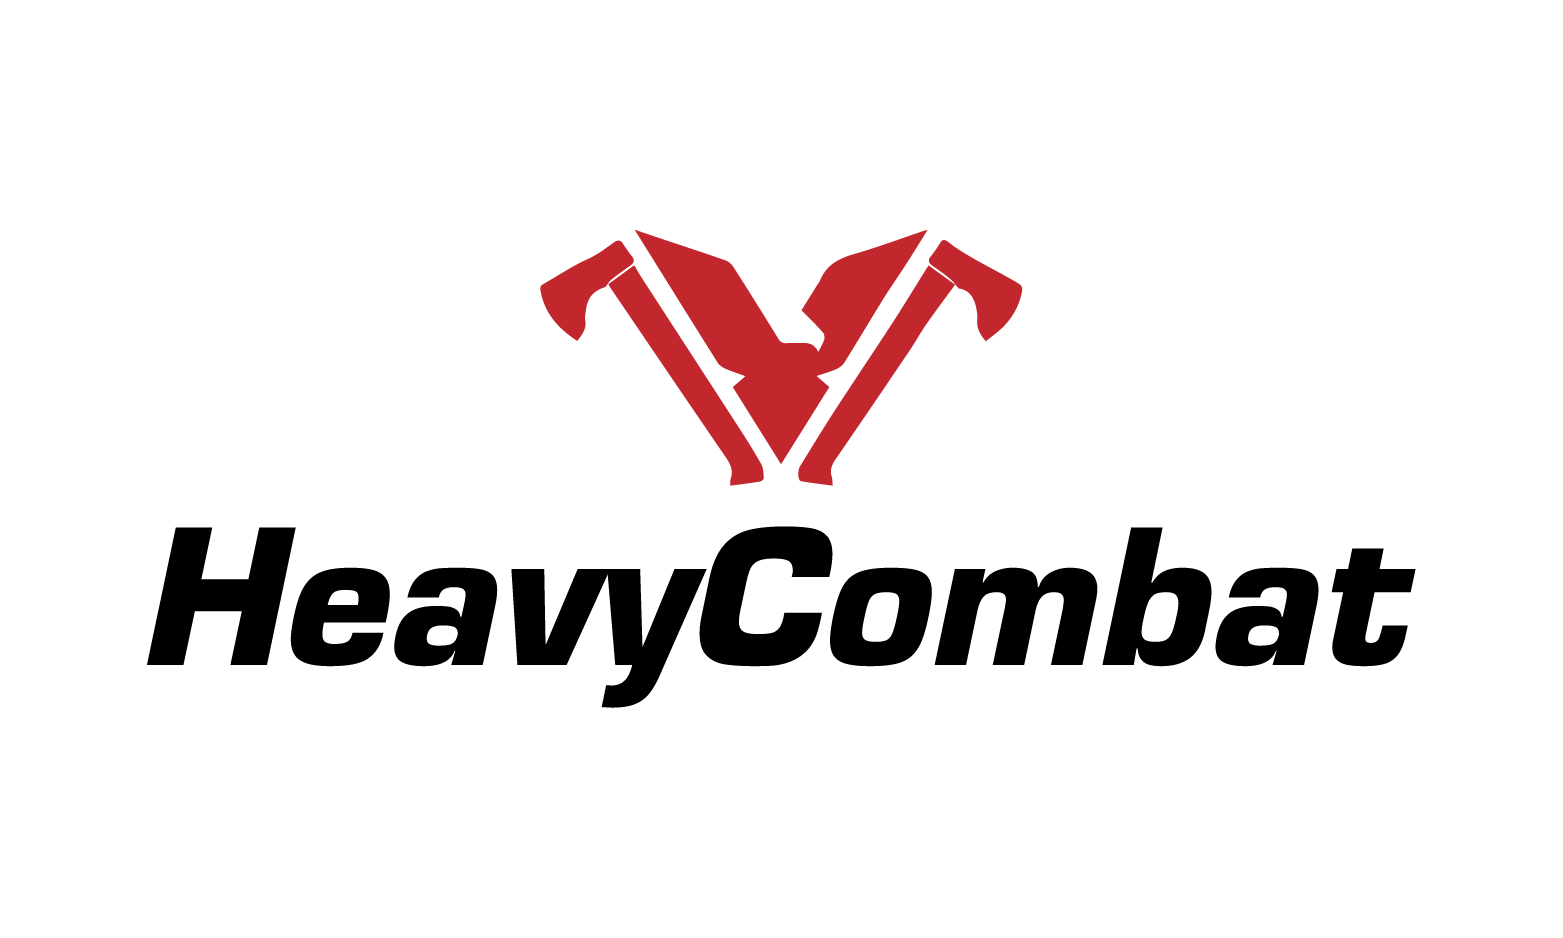 HeavyCombat.com - Creative brandable domain for sale